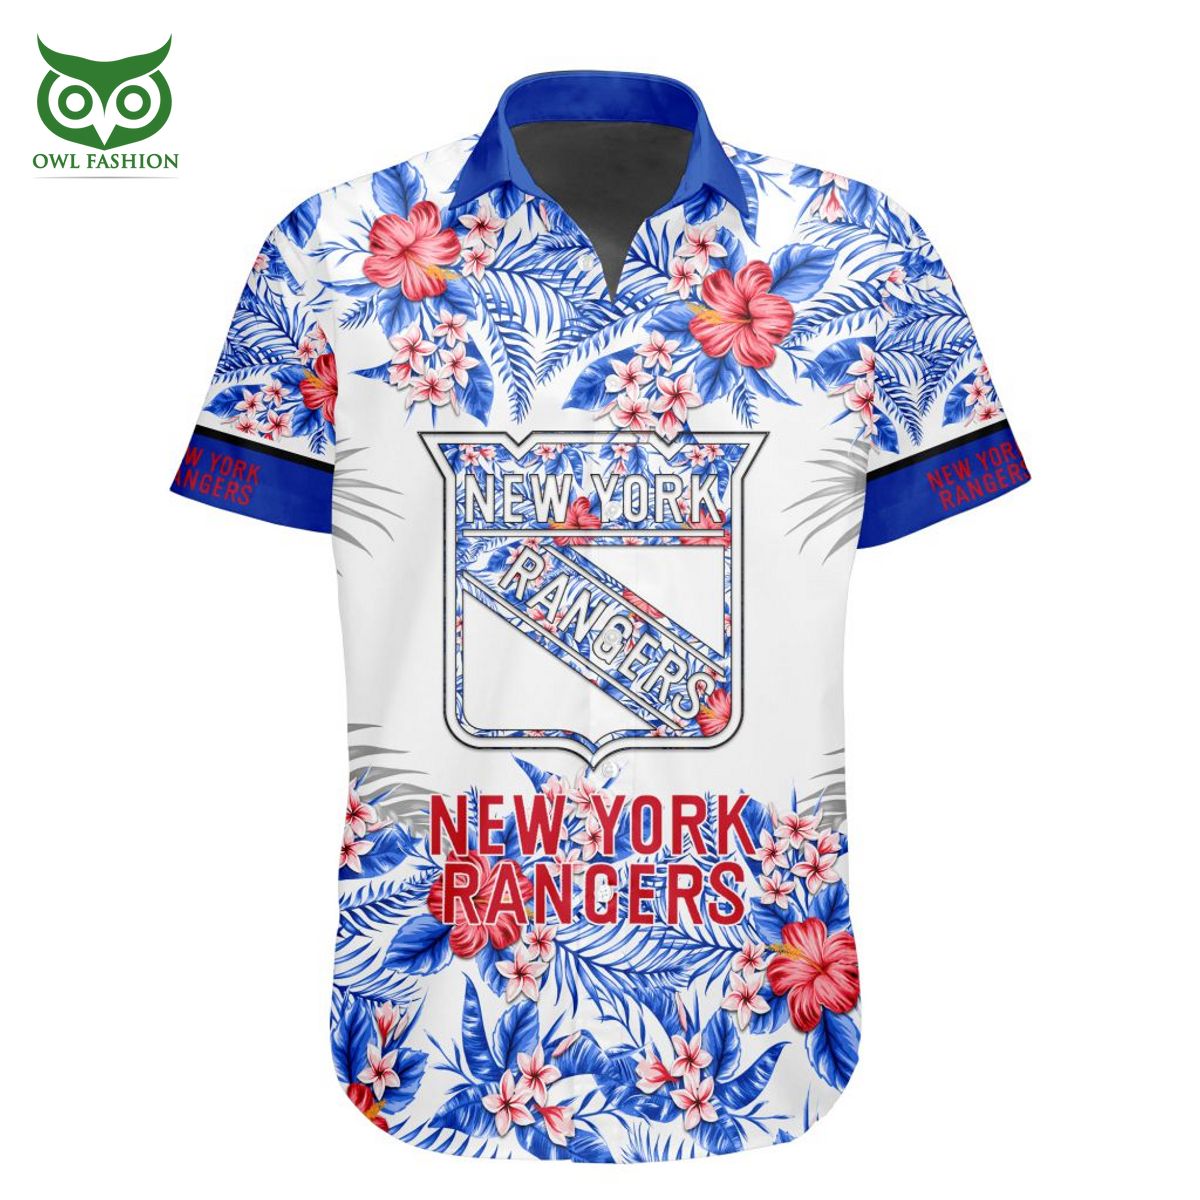 New York Rangers Blue and White Varsity Jacket - NHL Varsity Jacket XS